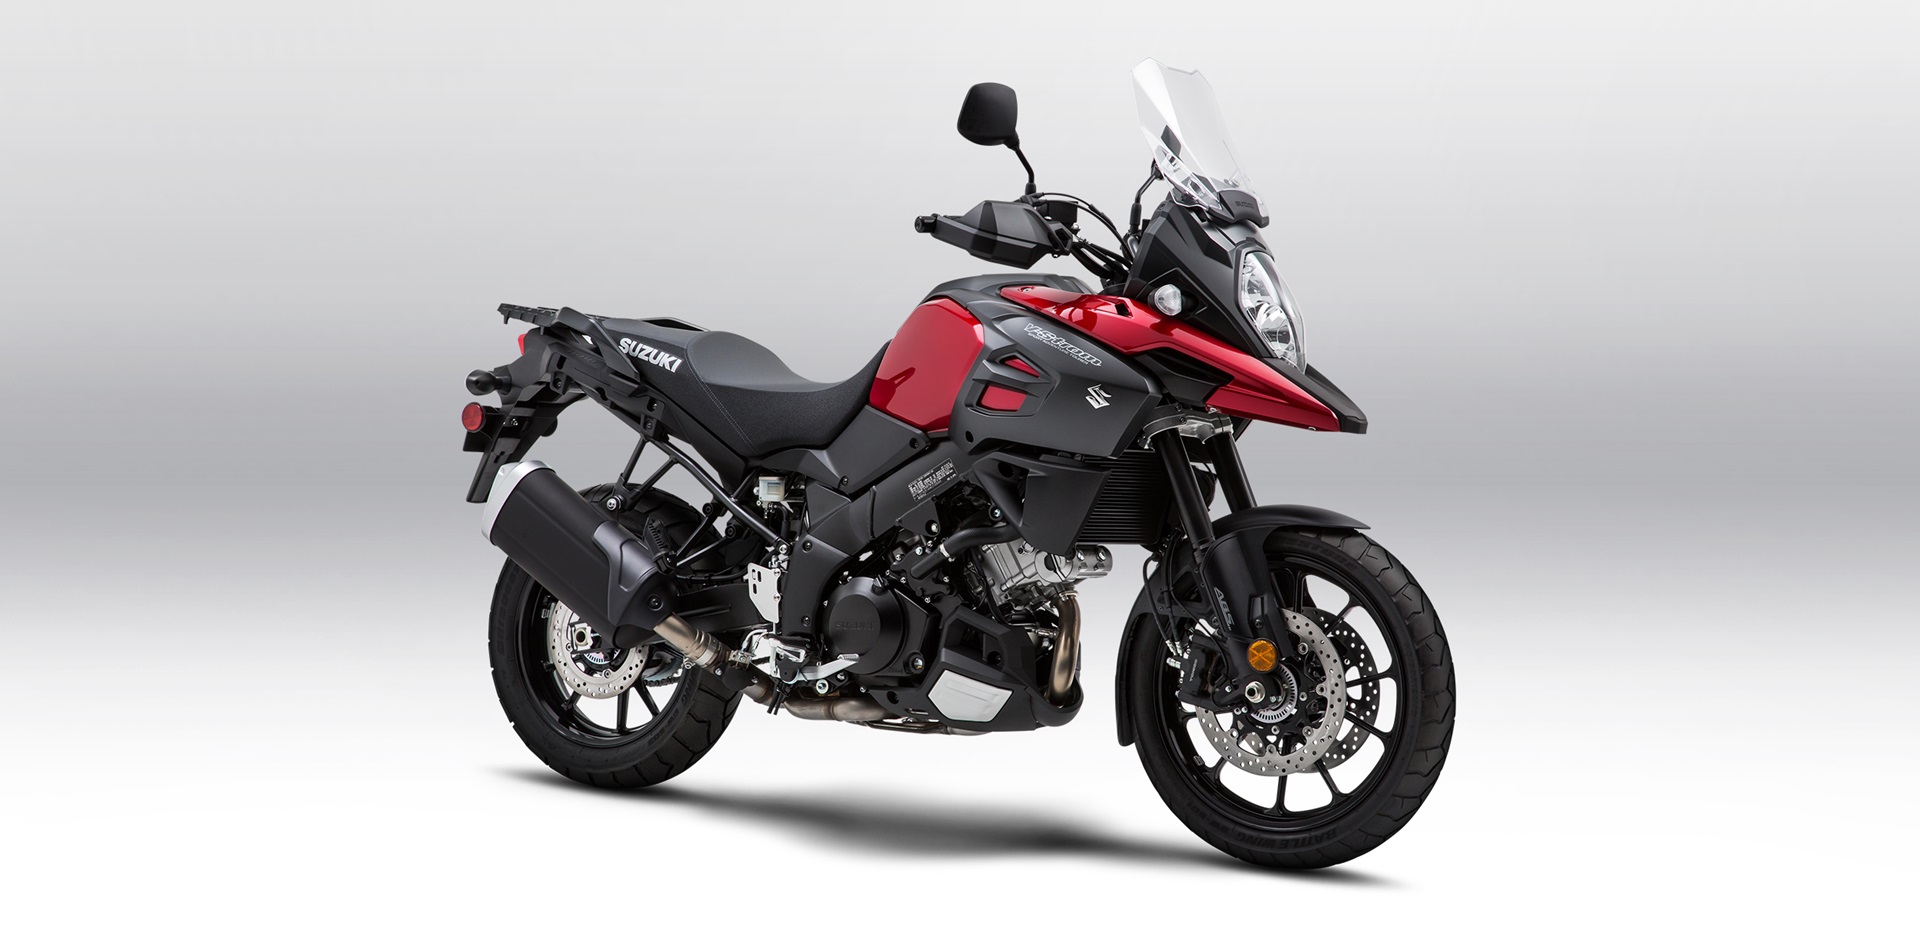 Suzuki V-Strom 1000 motorcycle for sale